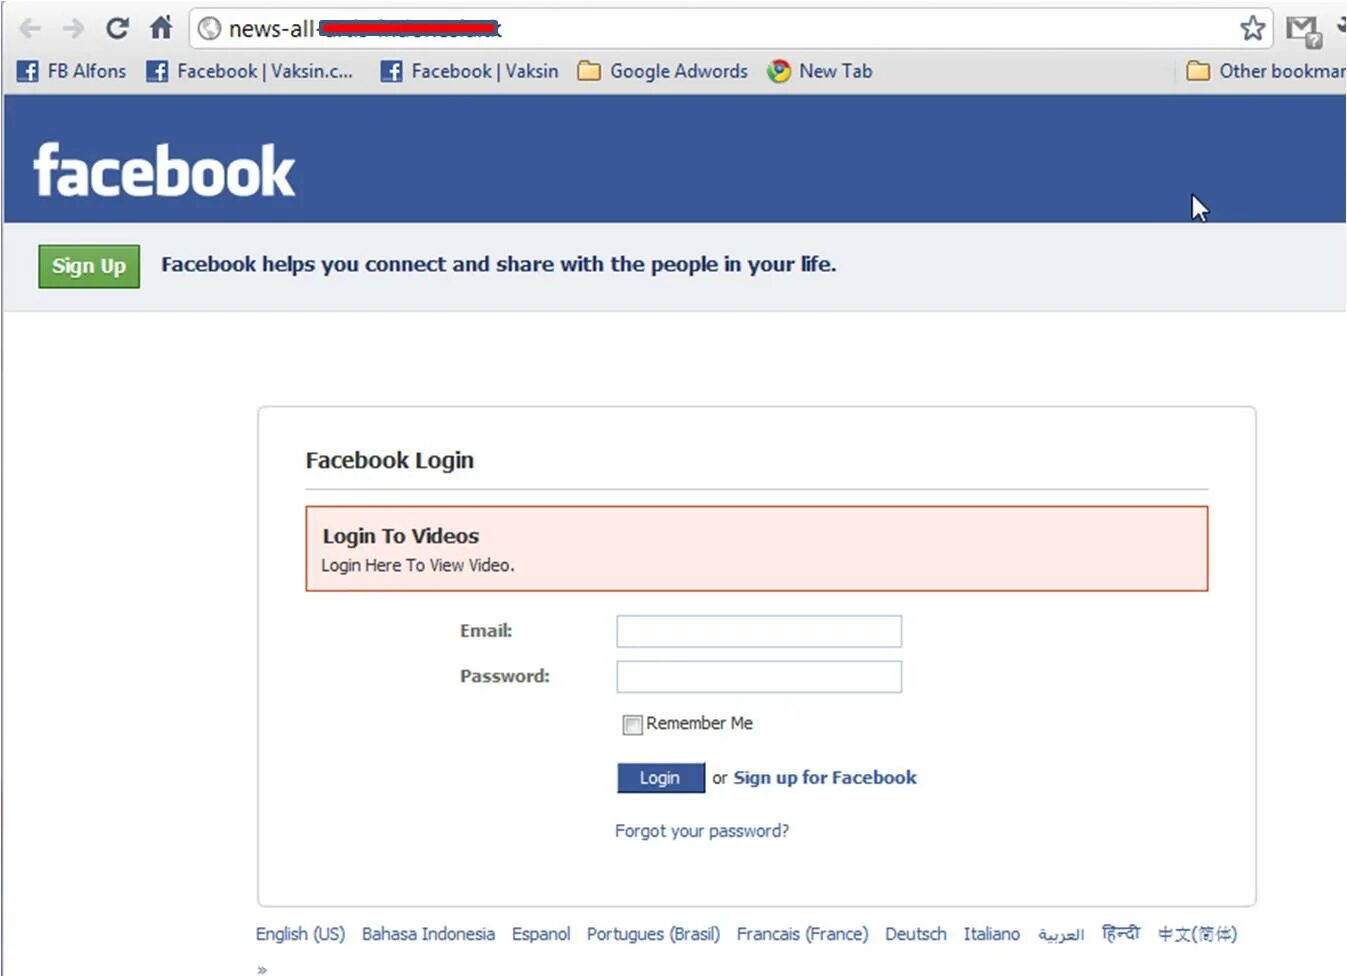 Facebook account. Facebook login. My Facebook account. Facebook username. Login here